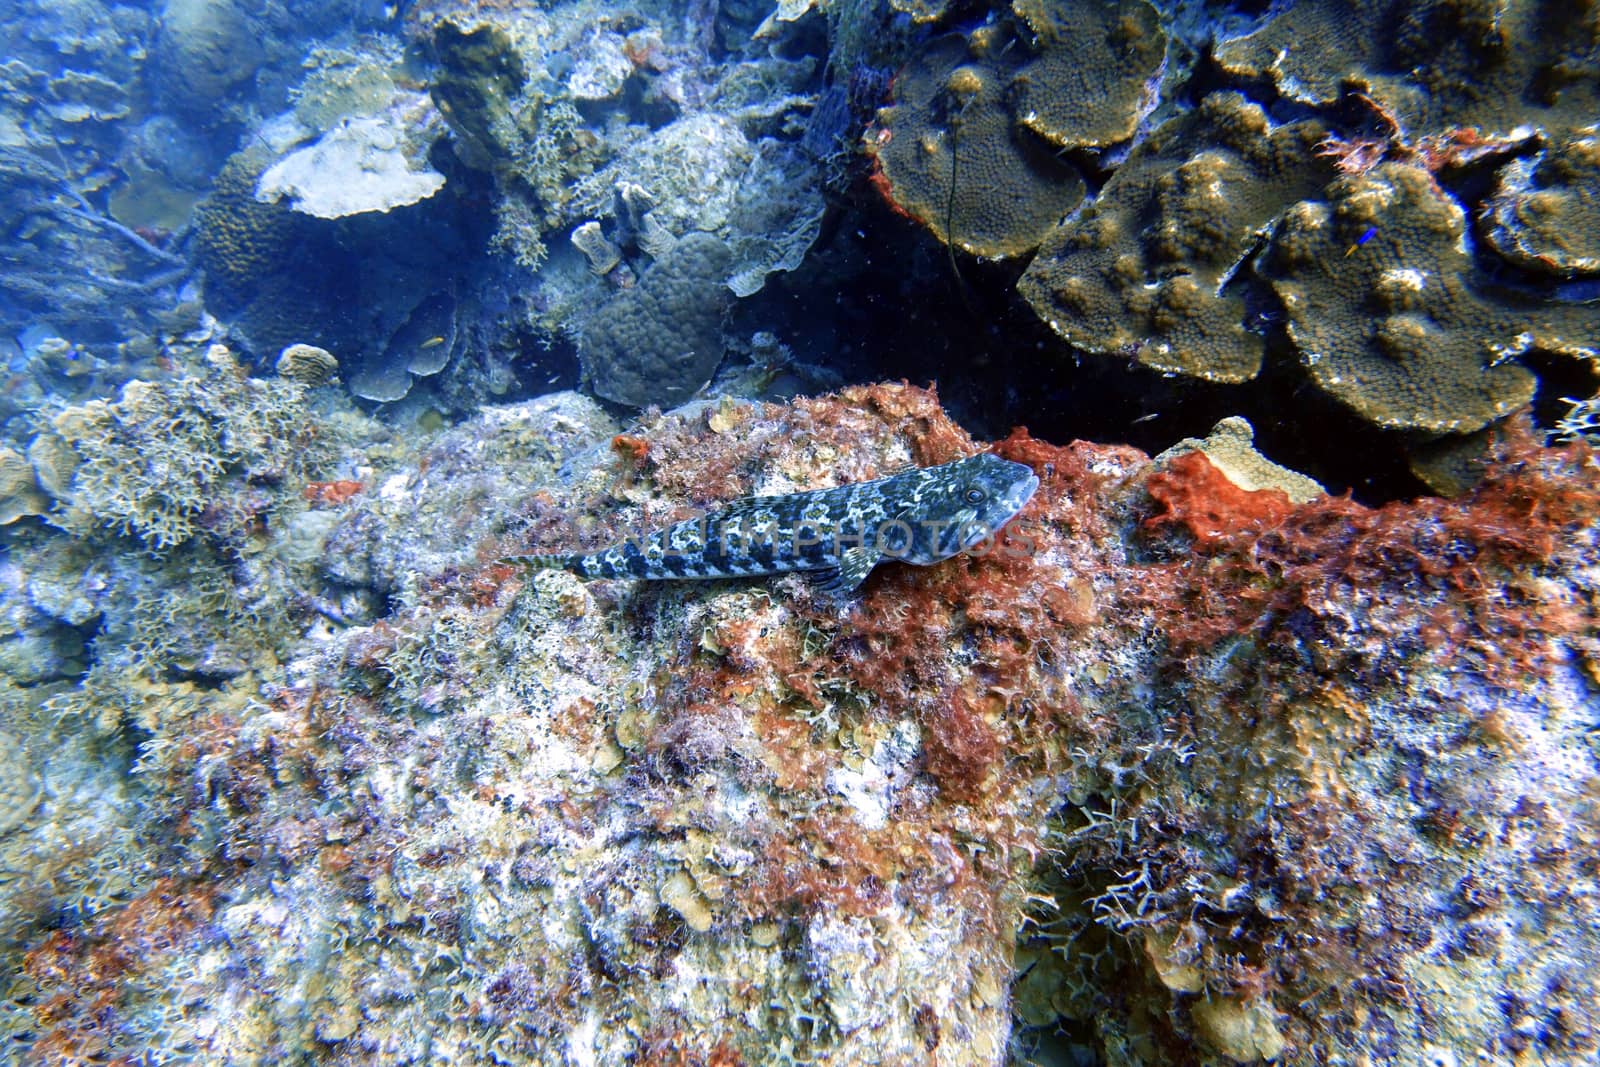 An underwater photo of a Lizardfish by Jshanebutt